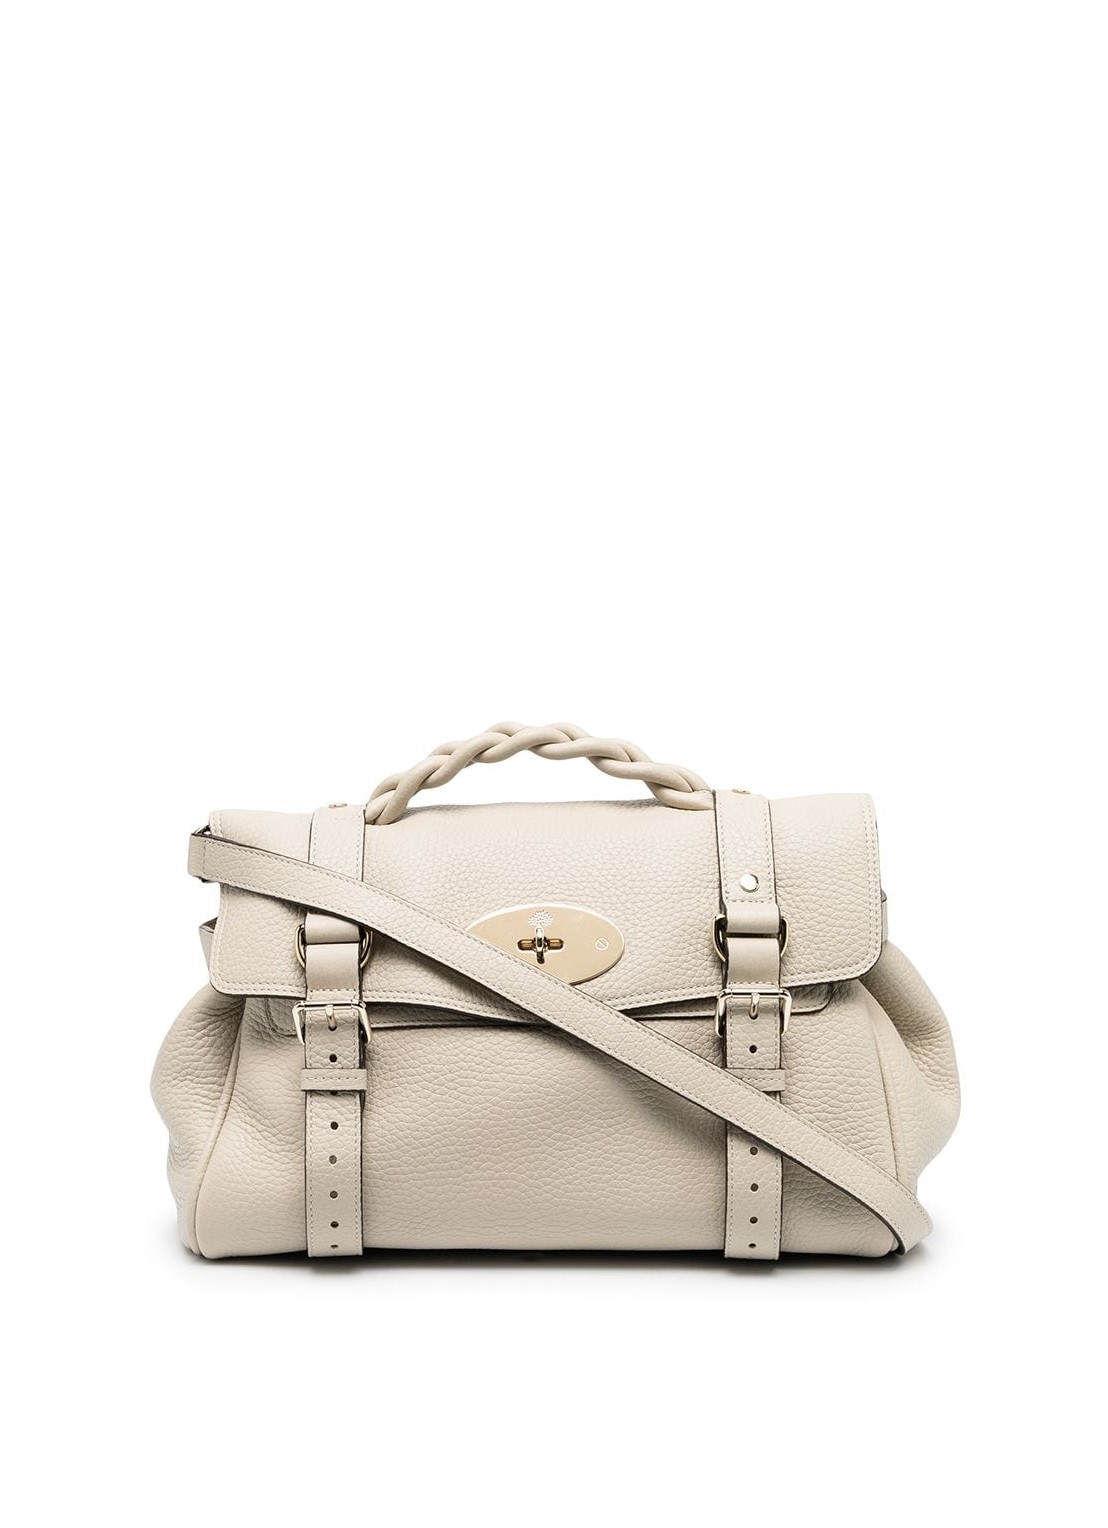 Handbag mulberry handbag woman alexa hh6746736 w160 talla beige
 